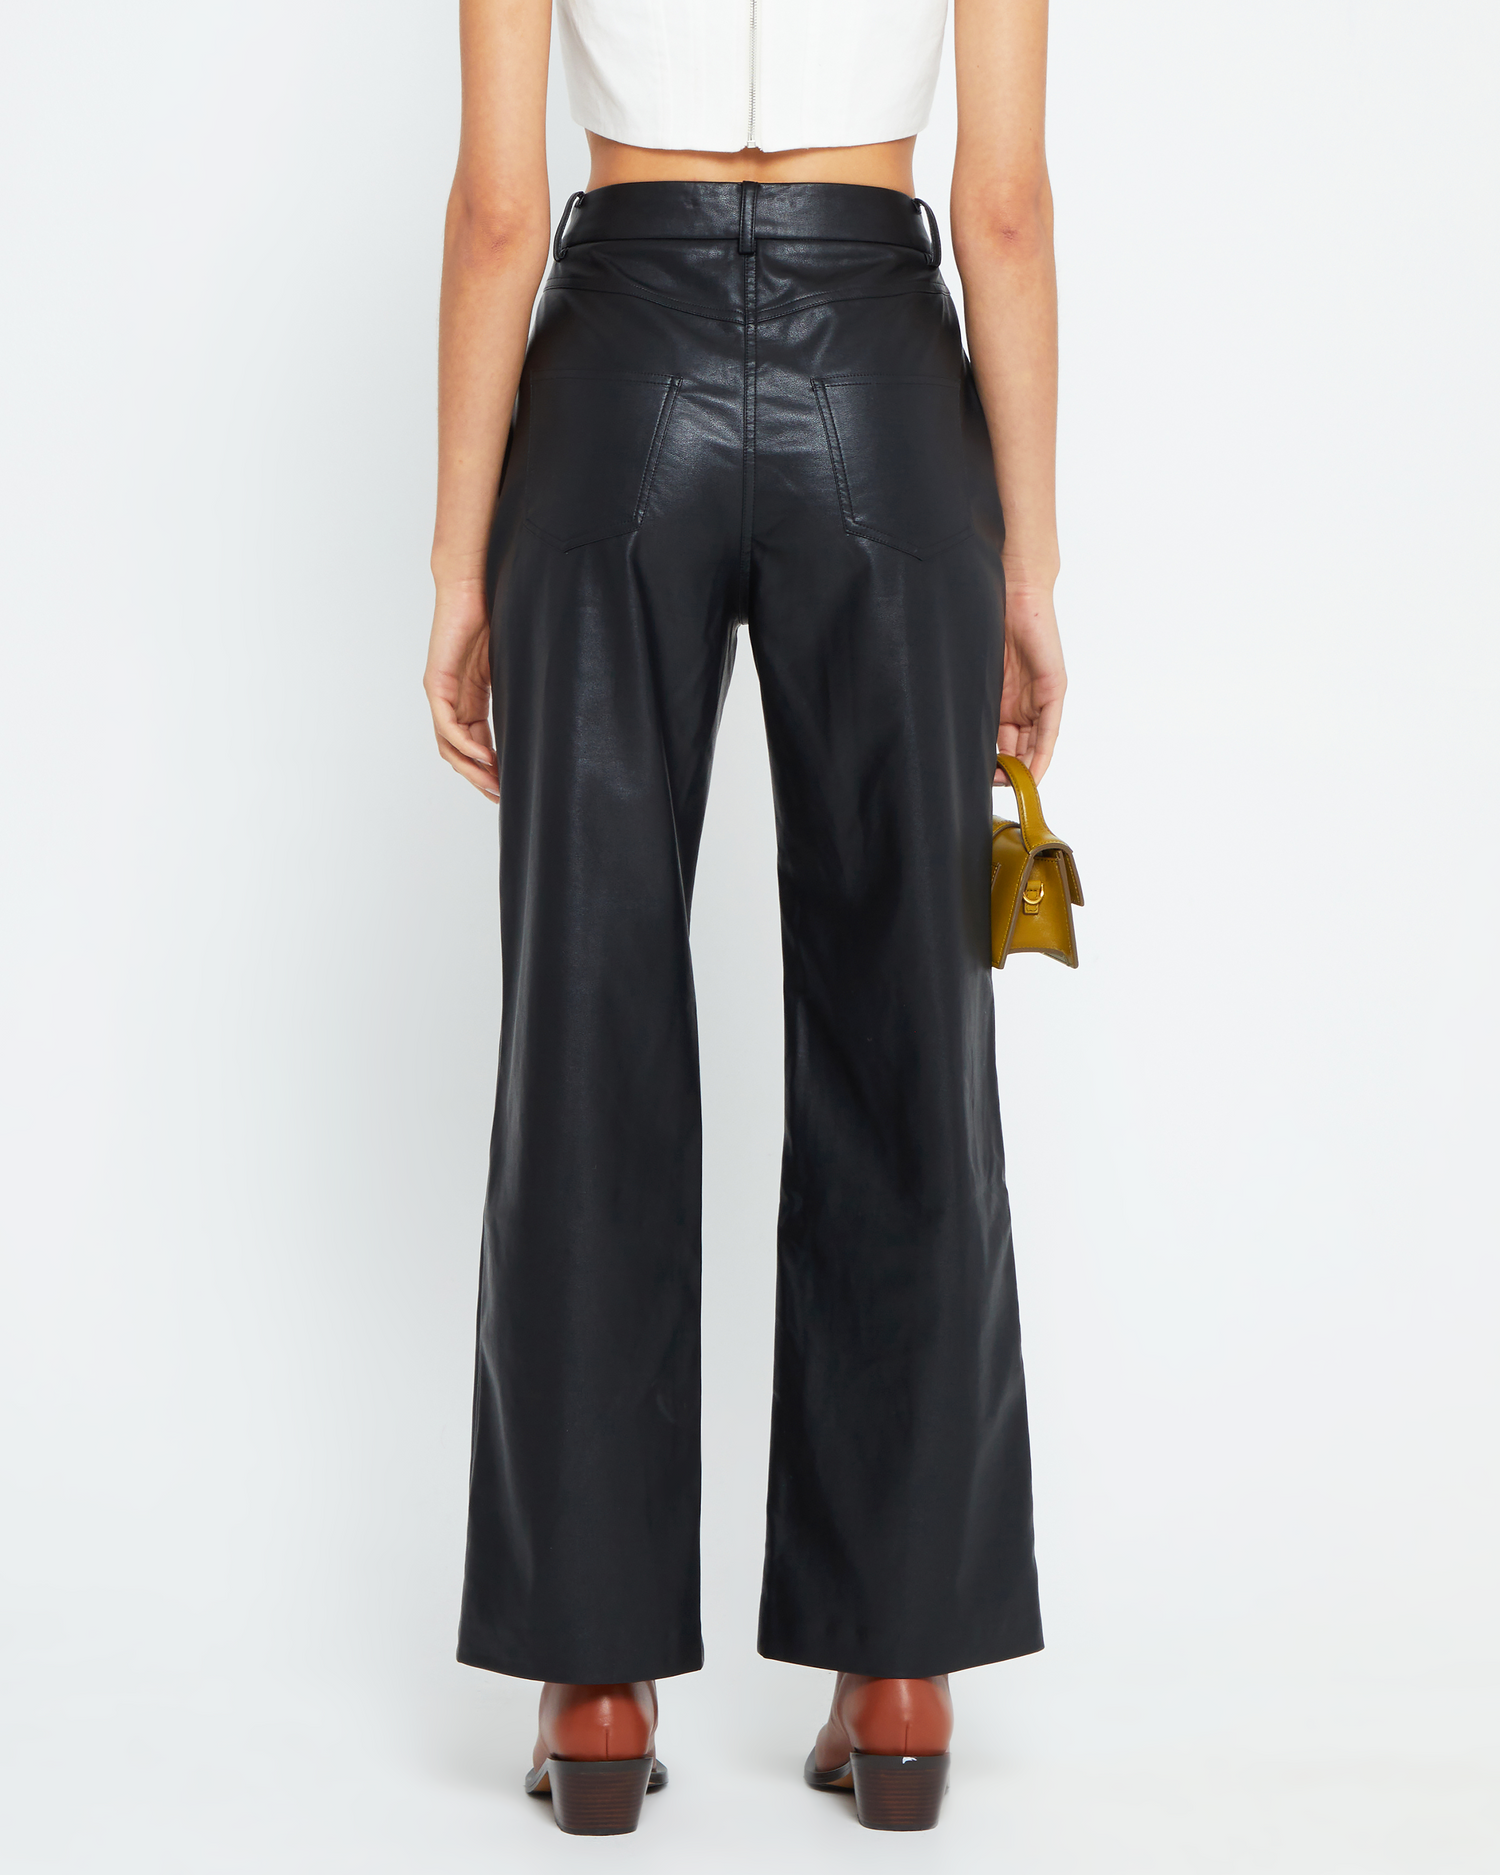 Small item Miss Moda Luxe BASICS Black Split Hem Faux Leather